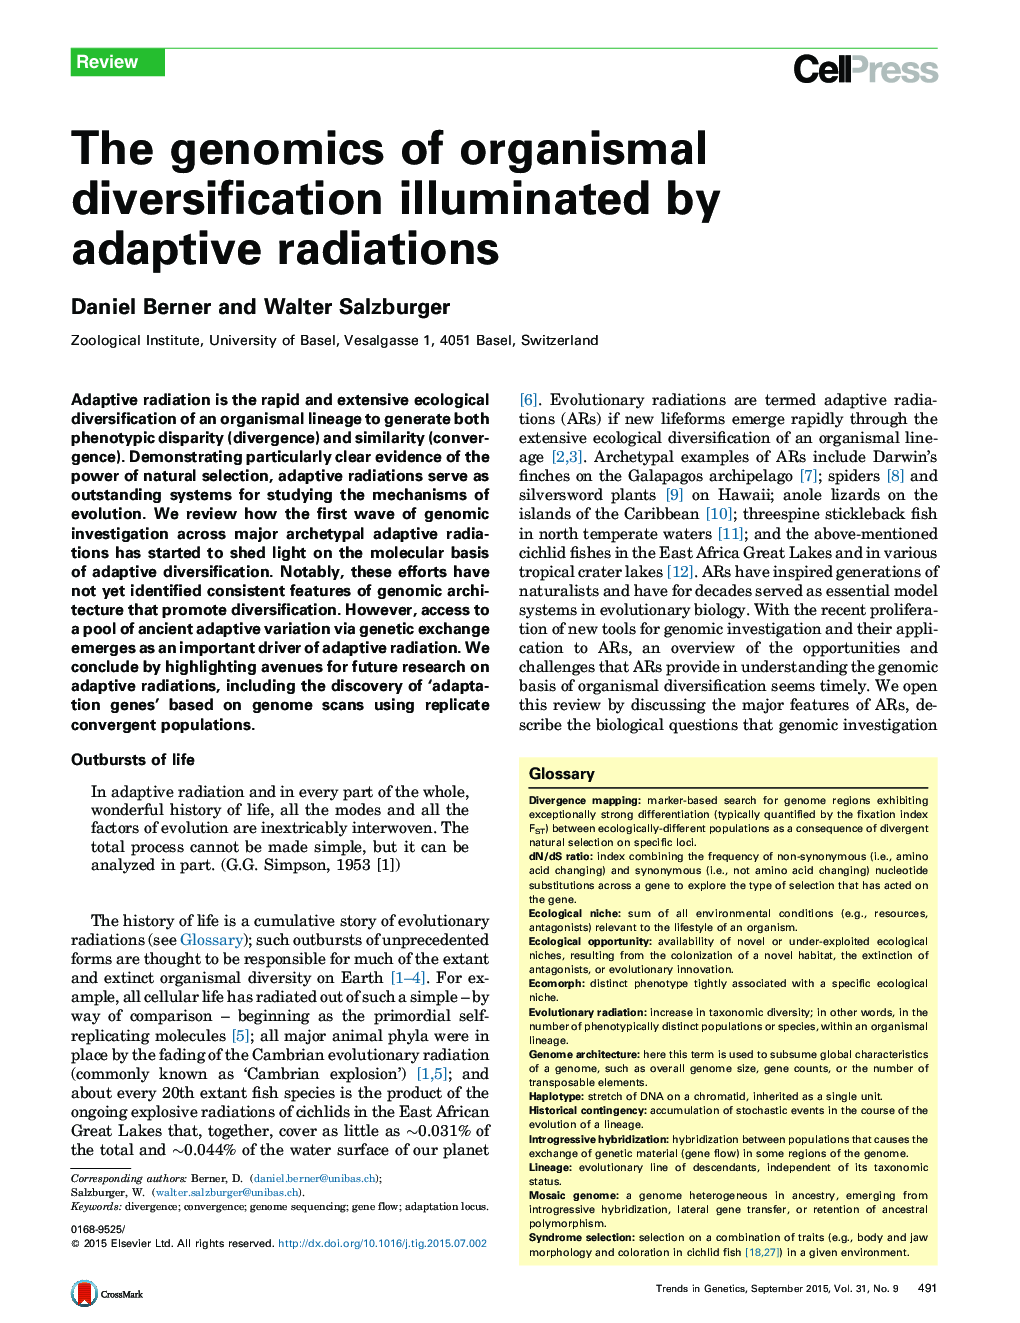 The genomics of organismal diversification illuminated by adaptive radiations